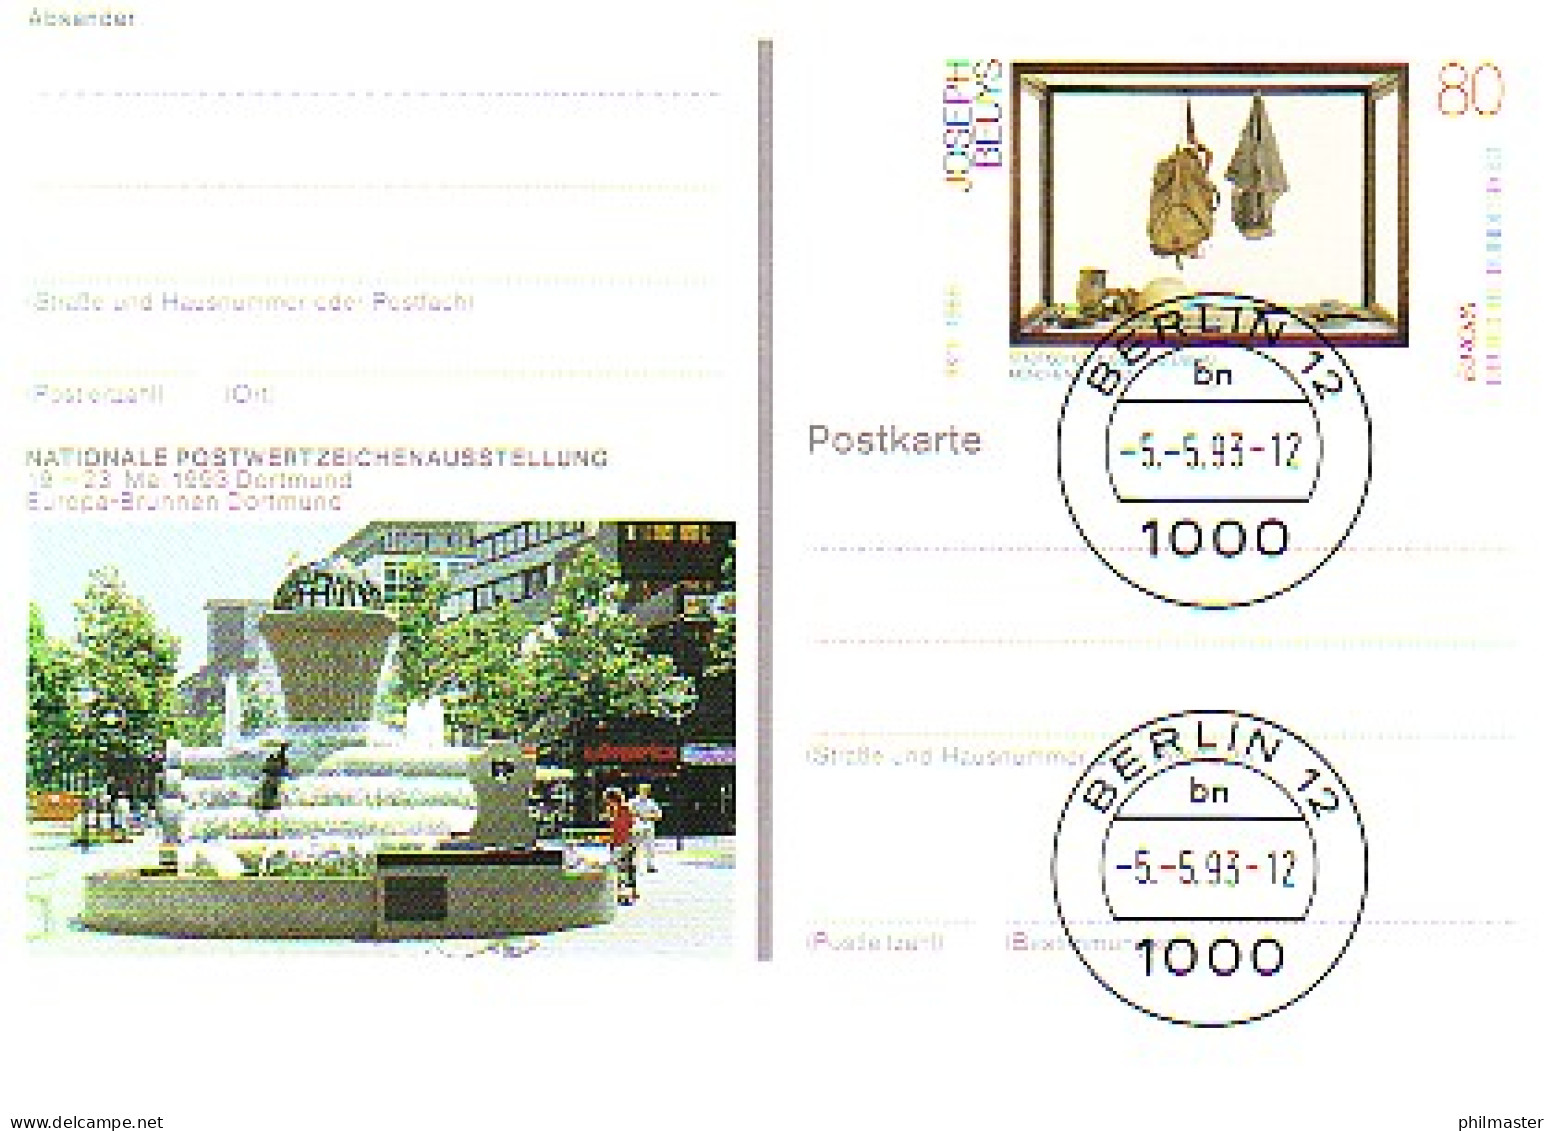 PSo 30 NAPOSTA Dortmund Europa-Brunnen 1993, VS-O Berlin 05.05.1993 - Cartes Postales - Neuves